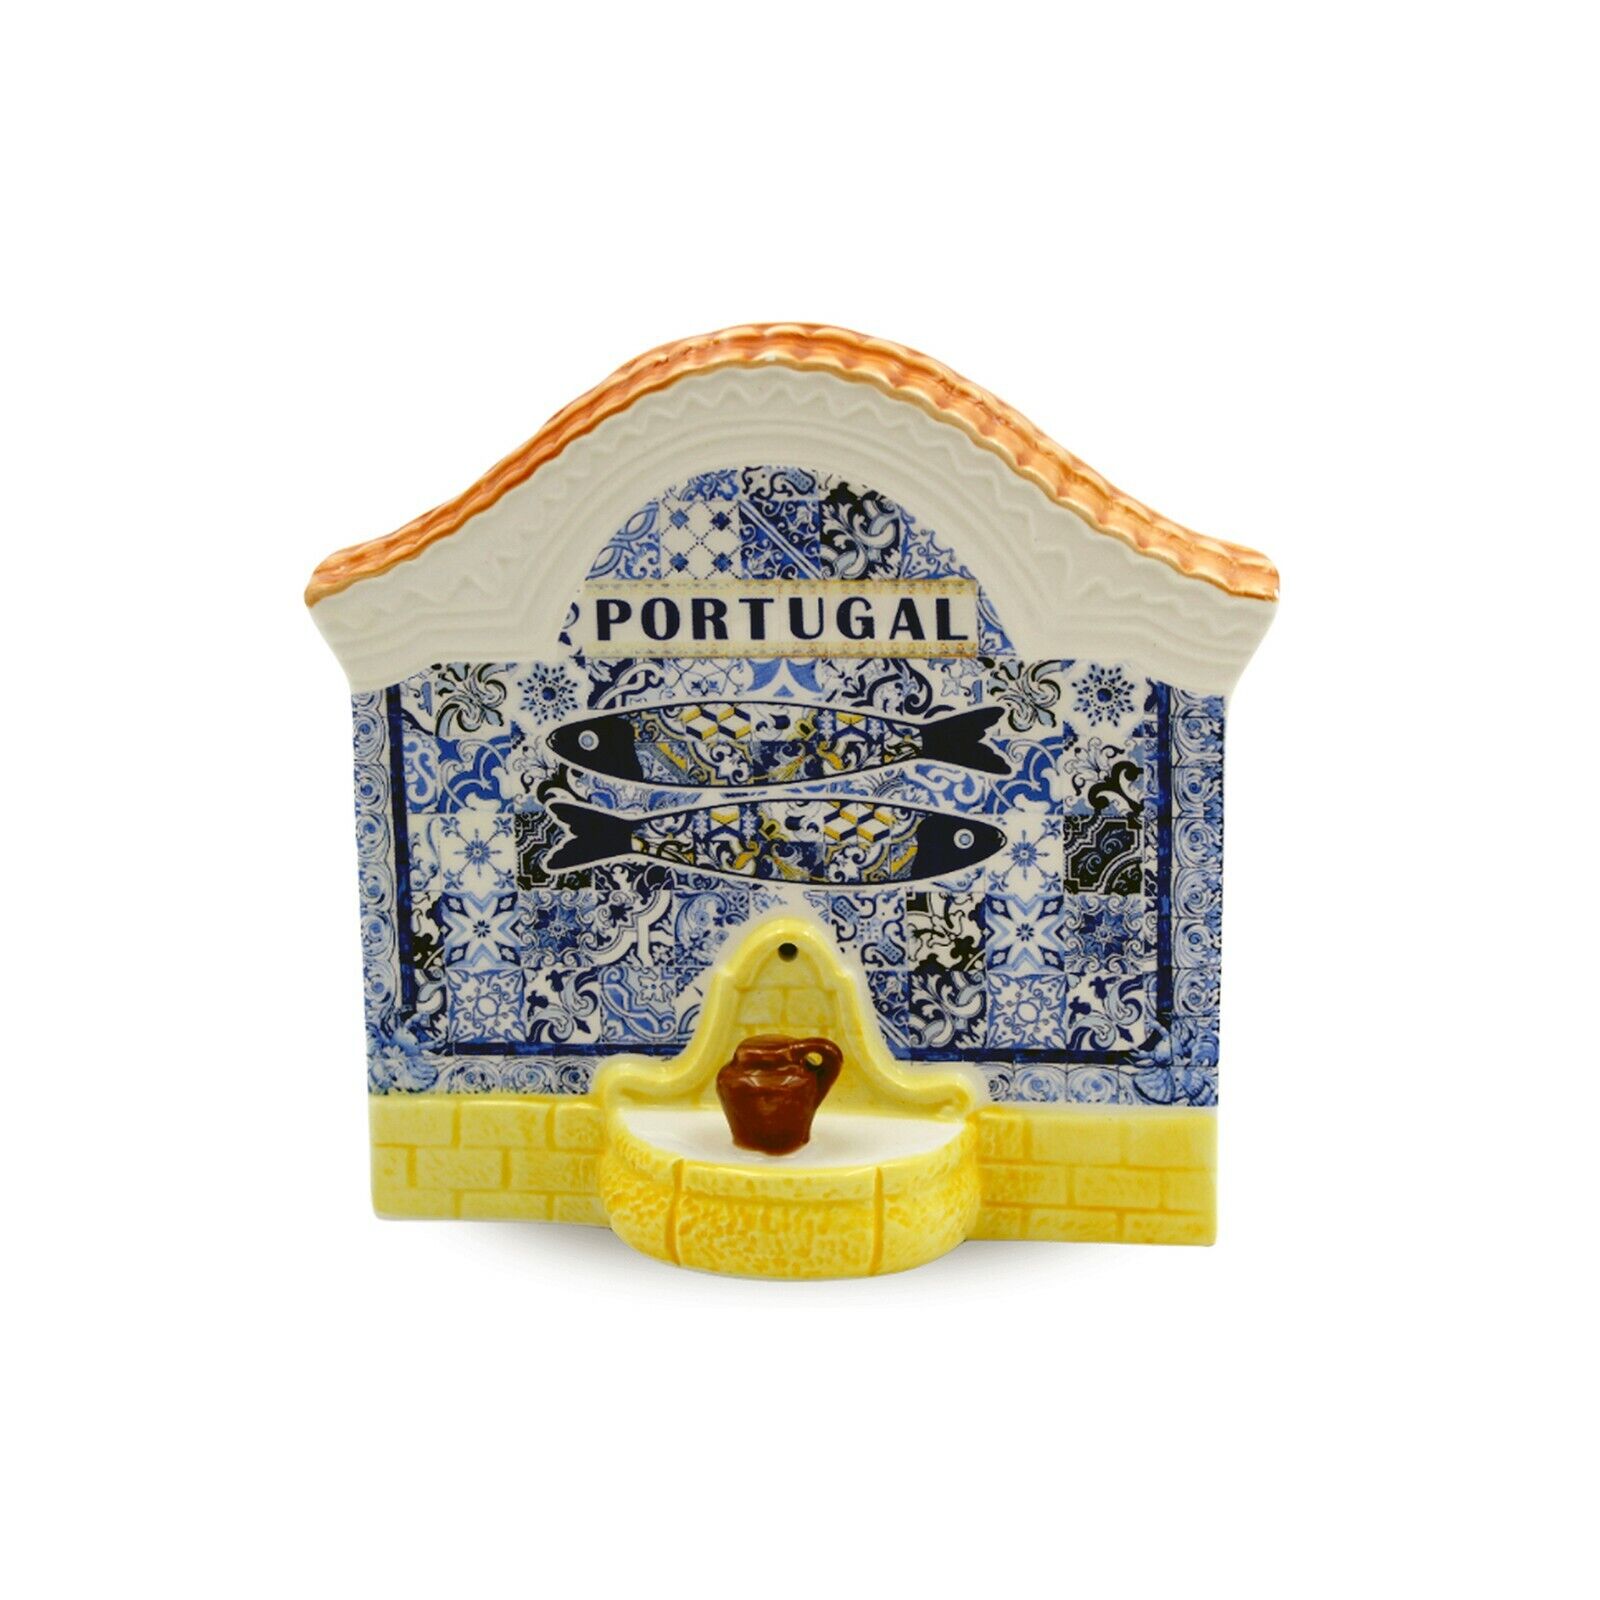 Decorative Portugal Tile and Sardine Ceramic Souvenir, Gift from Portugal